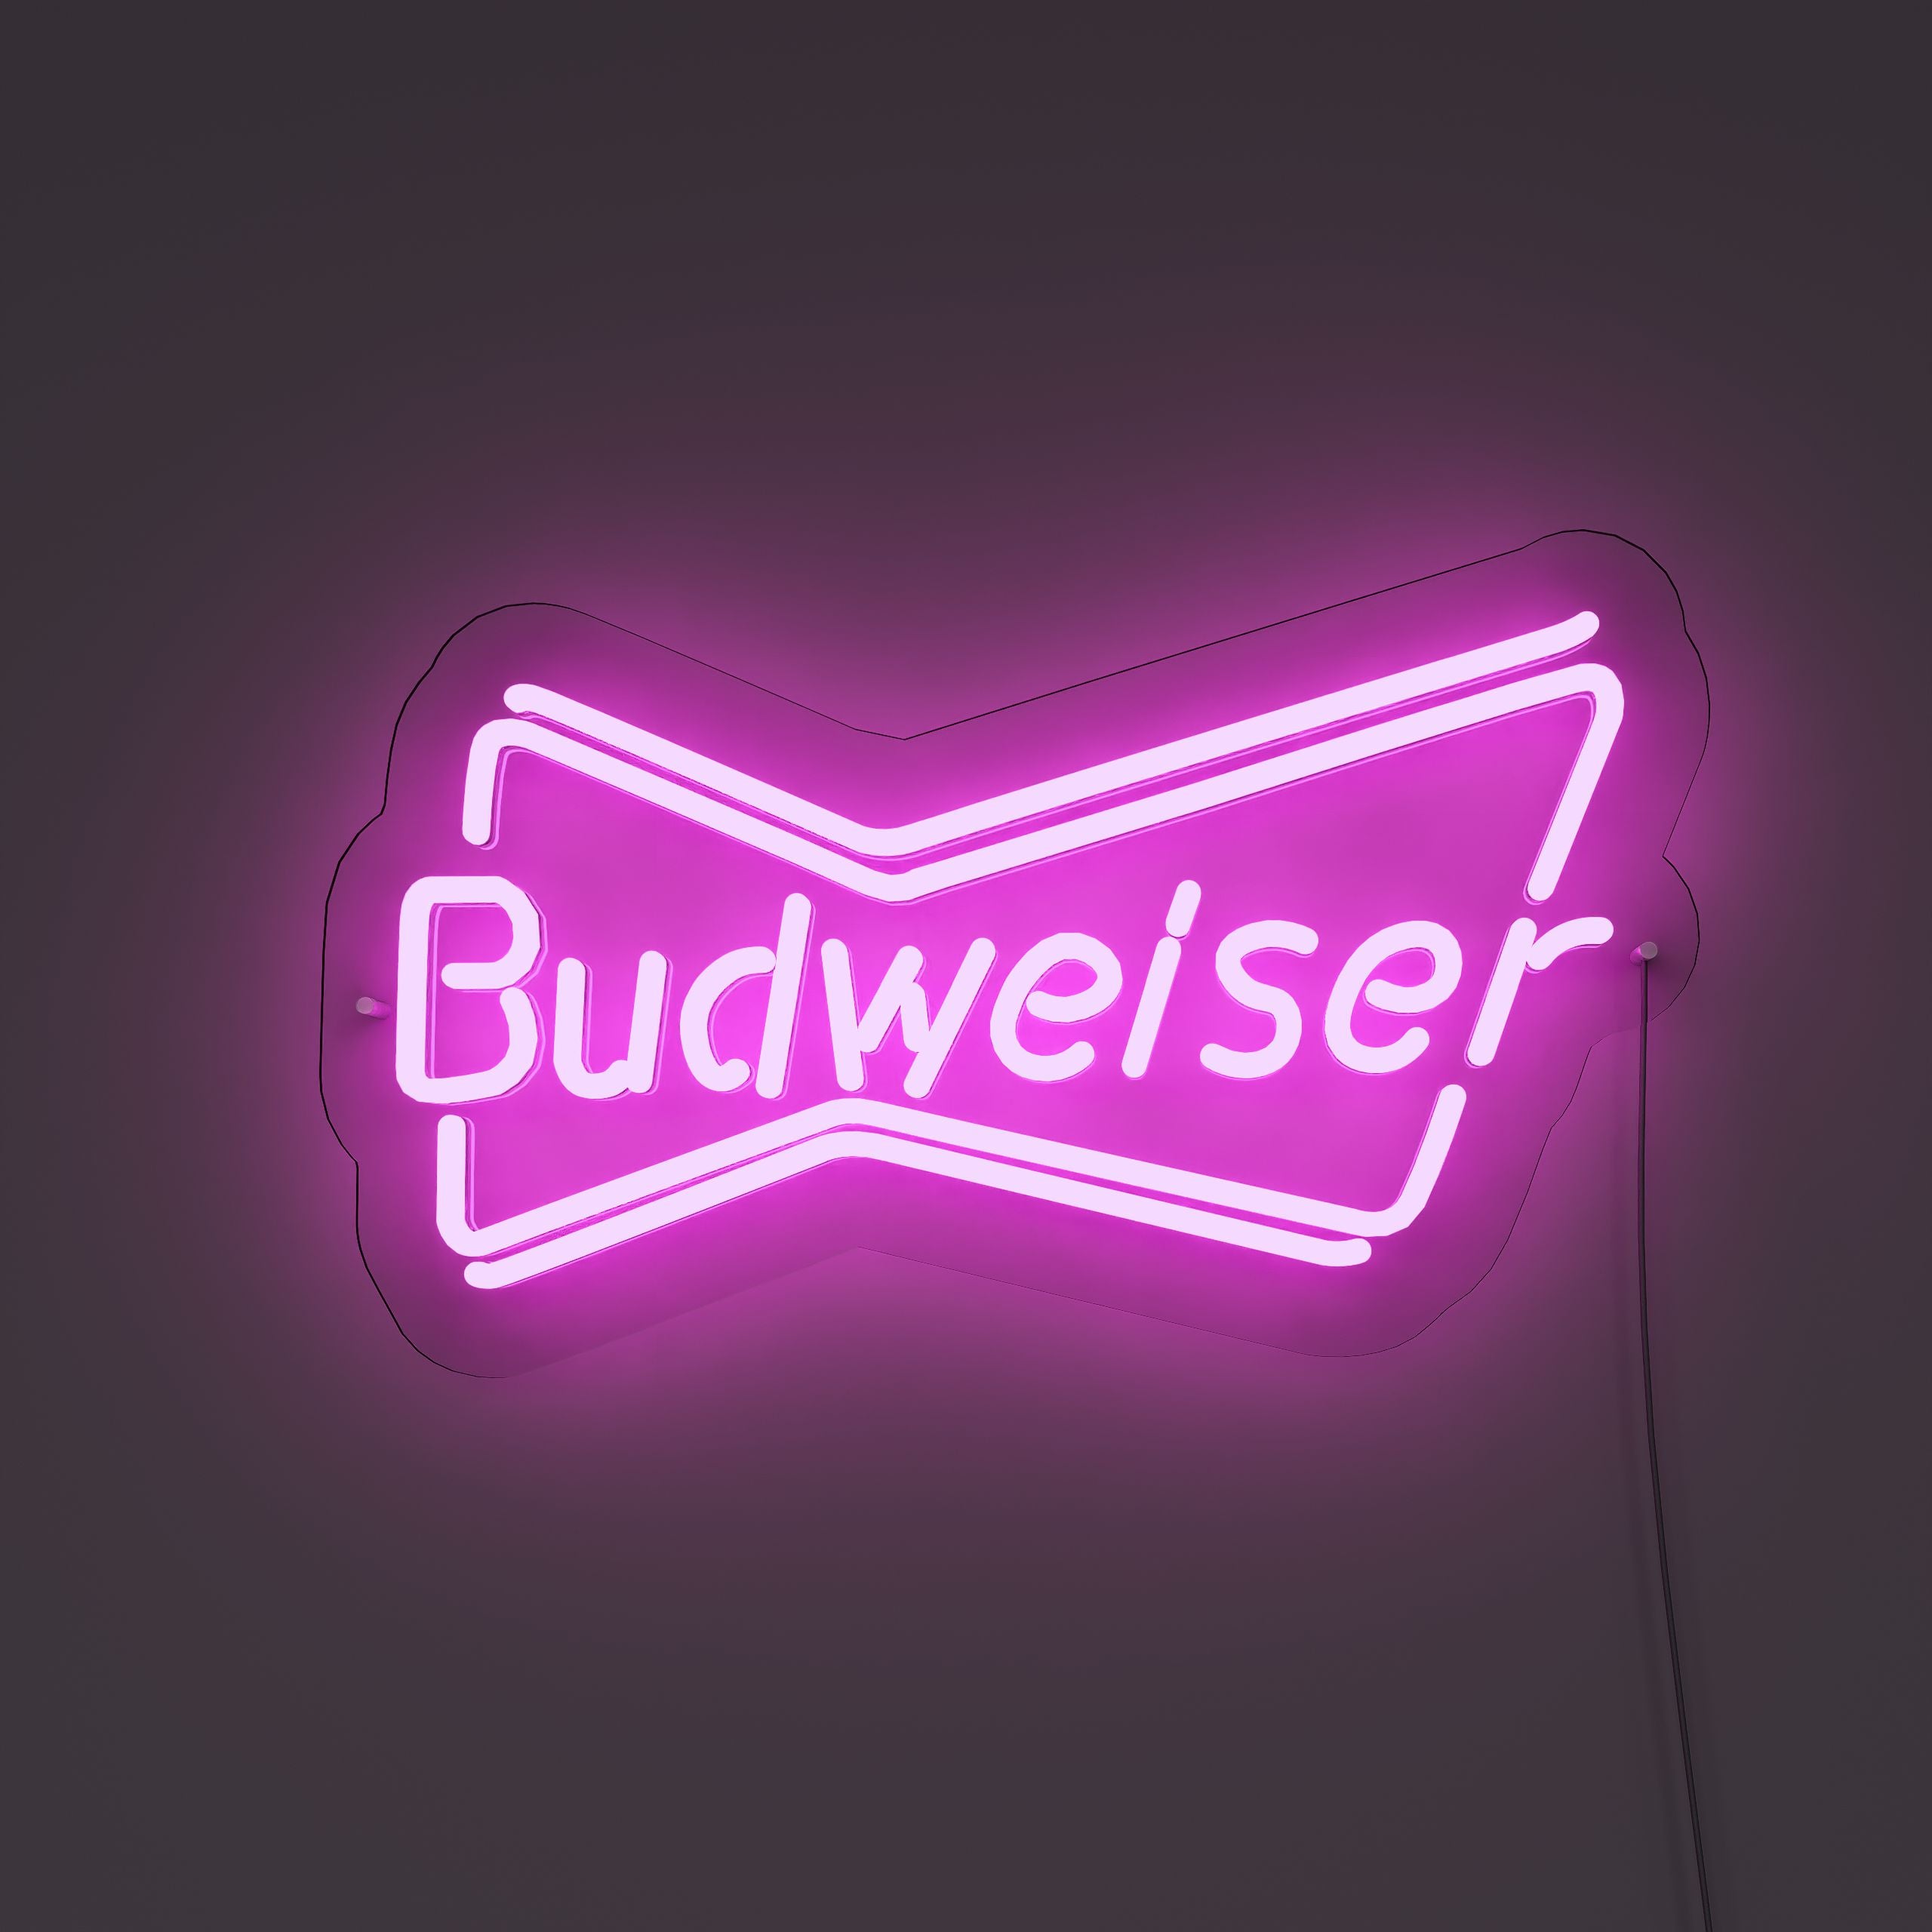 budweiser-neon-sign-Fuchsia-Neon-sign-Lite